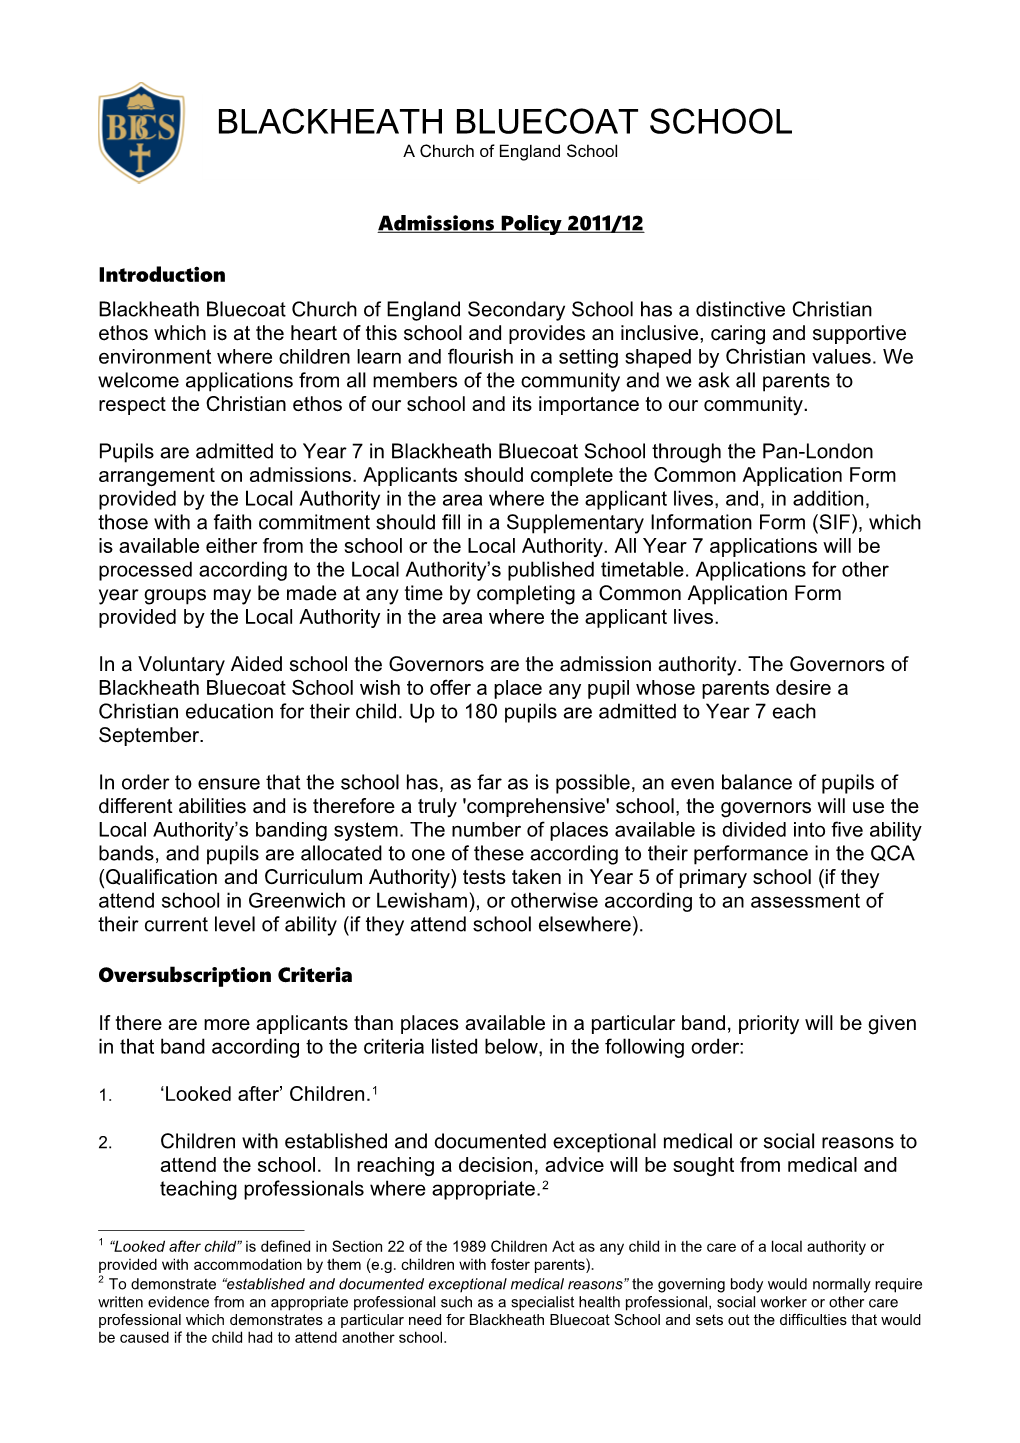 Blackheath Bluecoat Ce Secondary School - Admissions Criteria 2005/06 (Alternative)